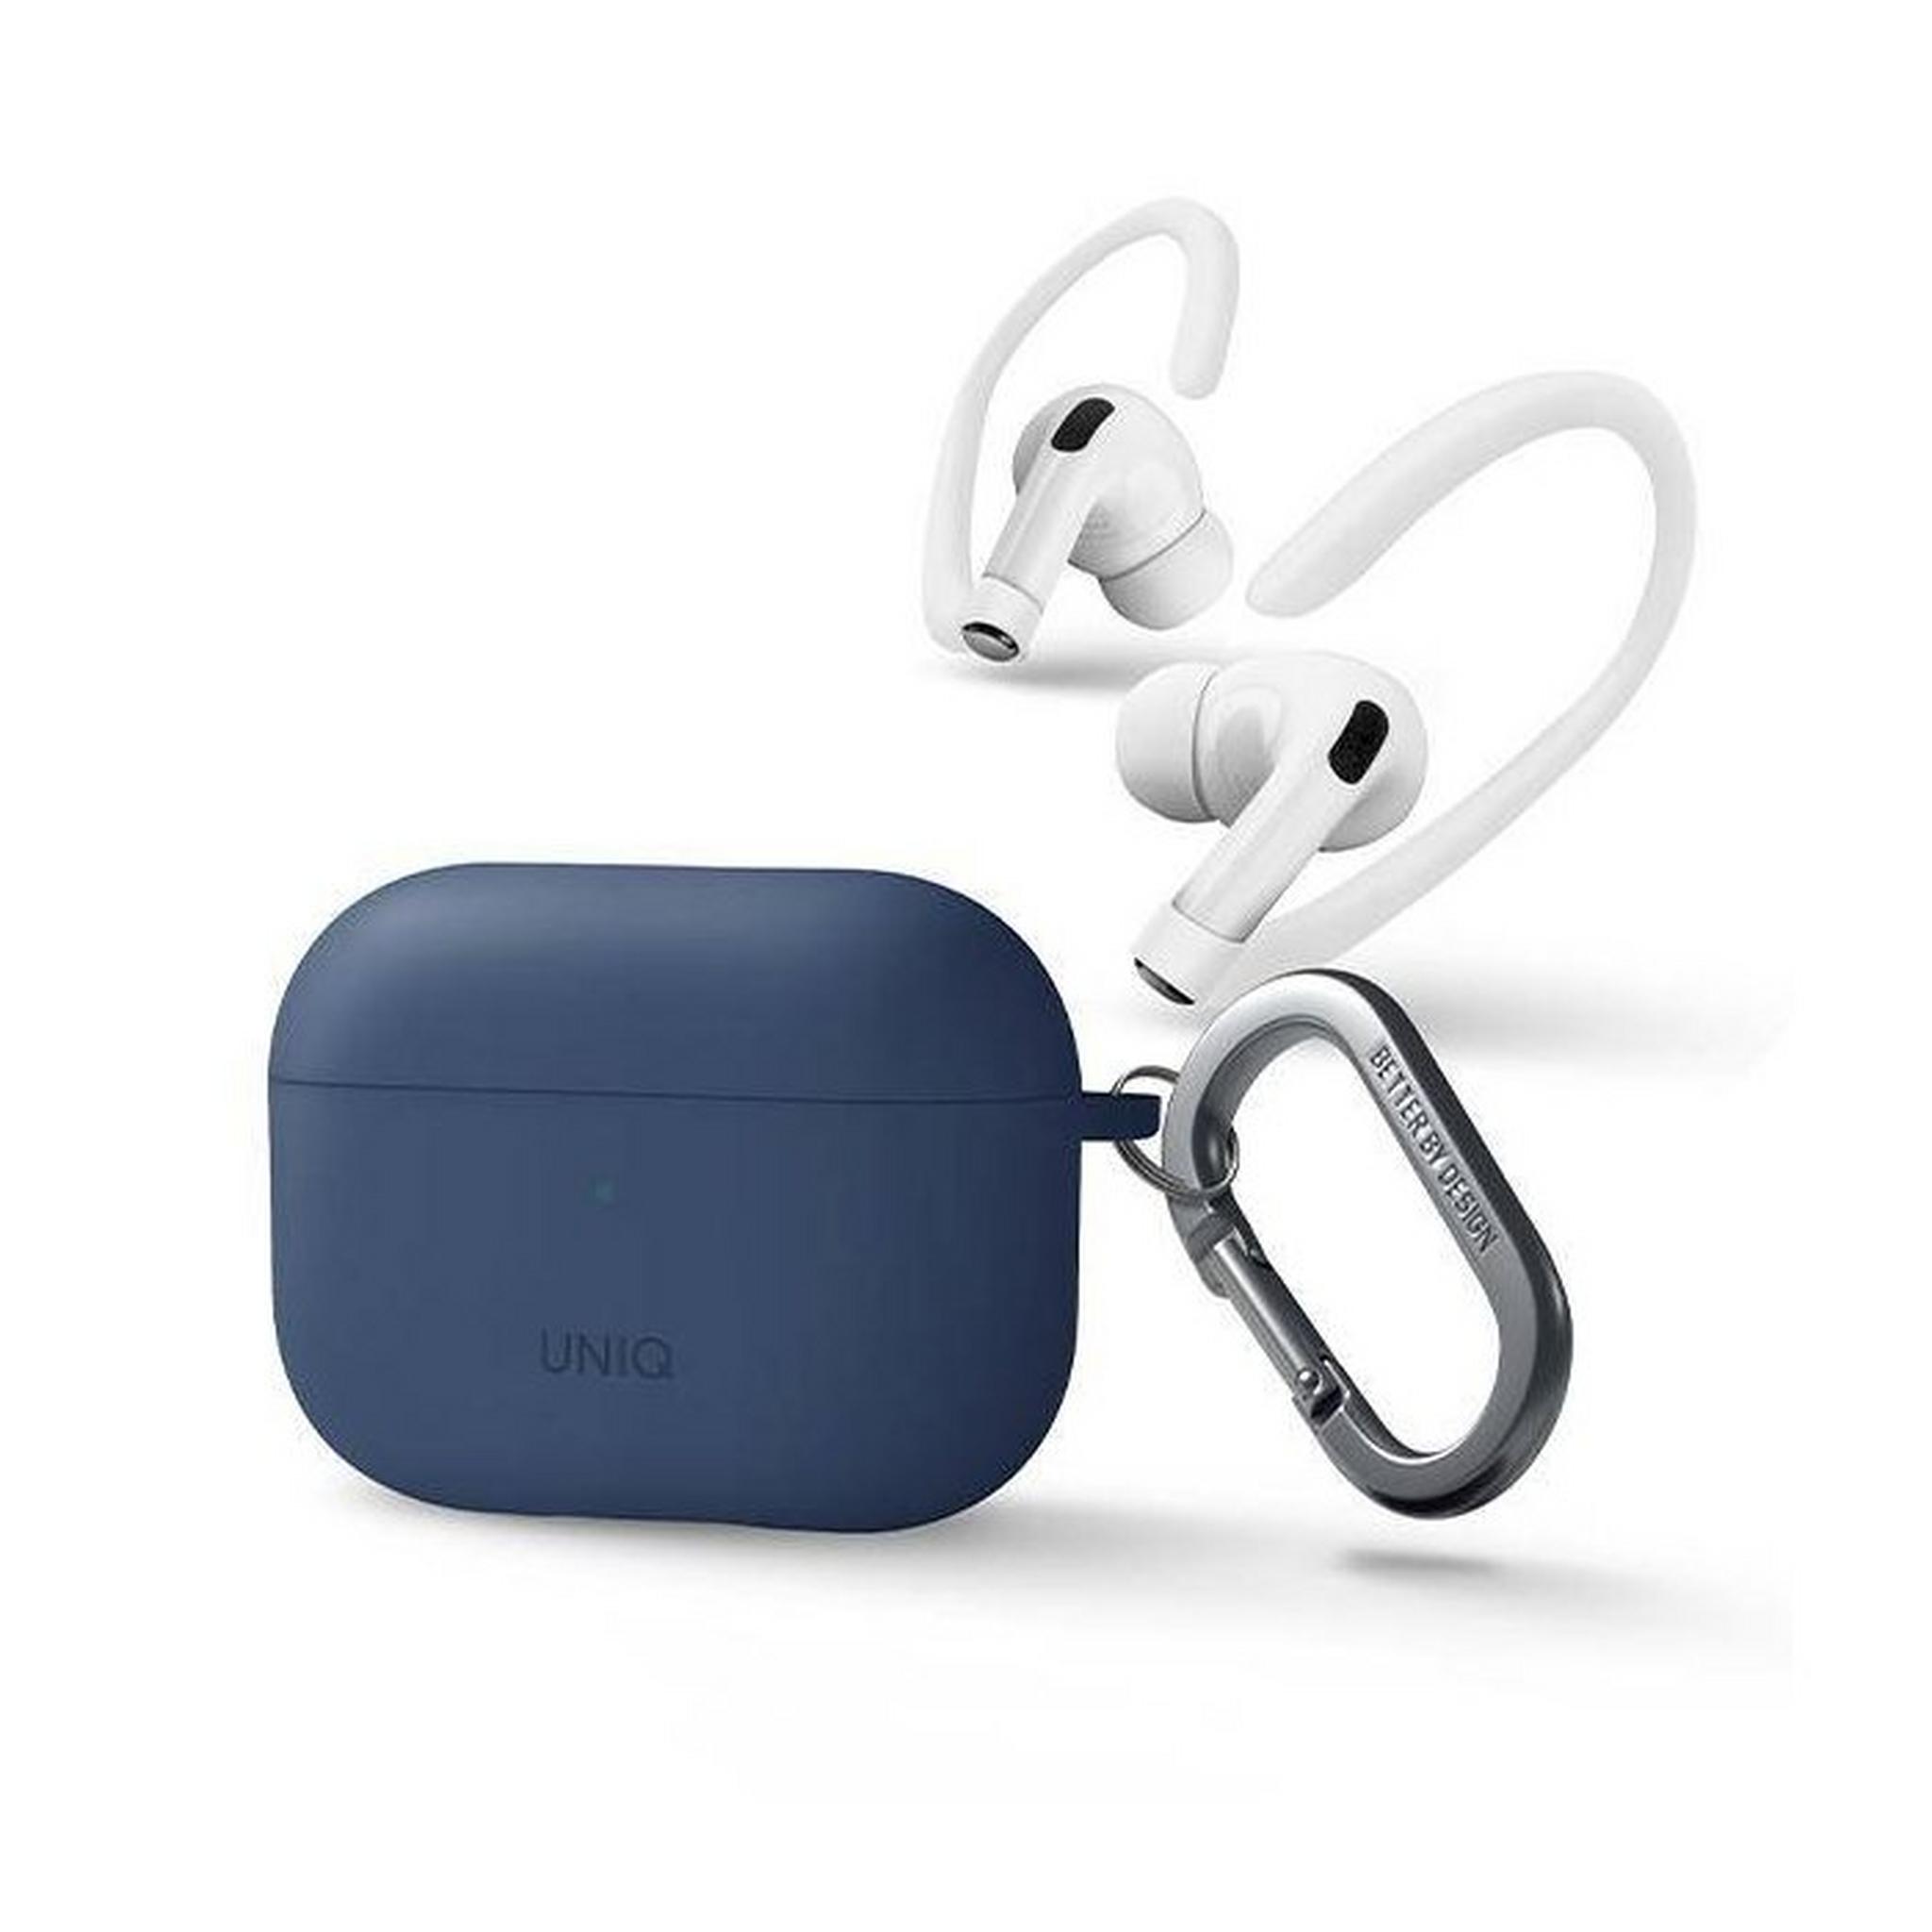 Uniq Nexo Silicon Case For Airpods Pro 2 with Ear Hooks - Blue